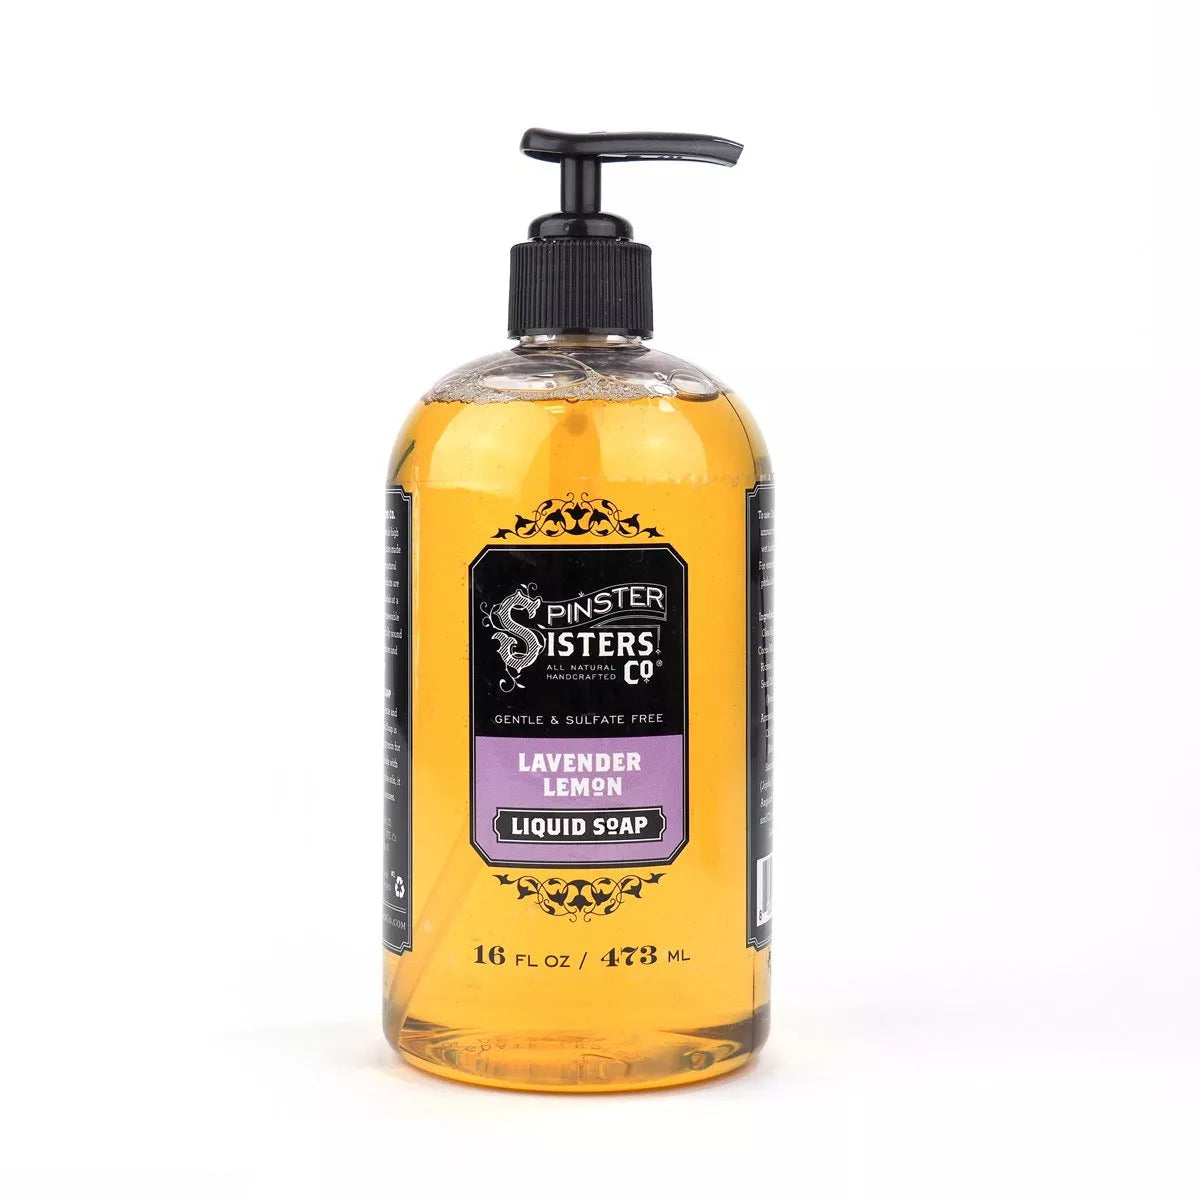 A 16 oz. hand pump bottle of Lavender Lemon liquid hand and body soap